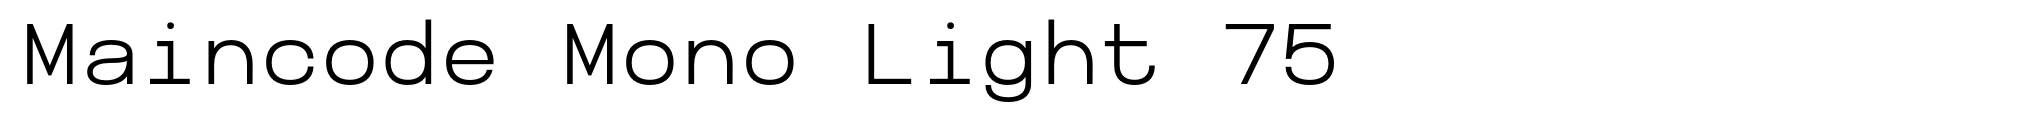 Maincode Mono Light 75 image